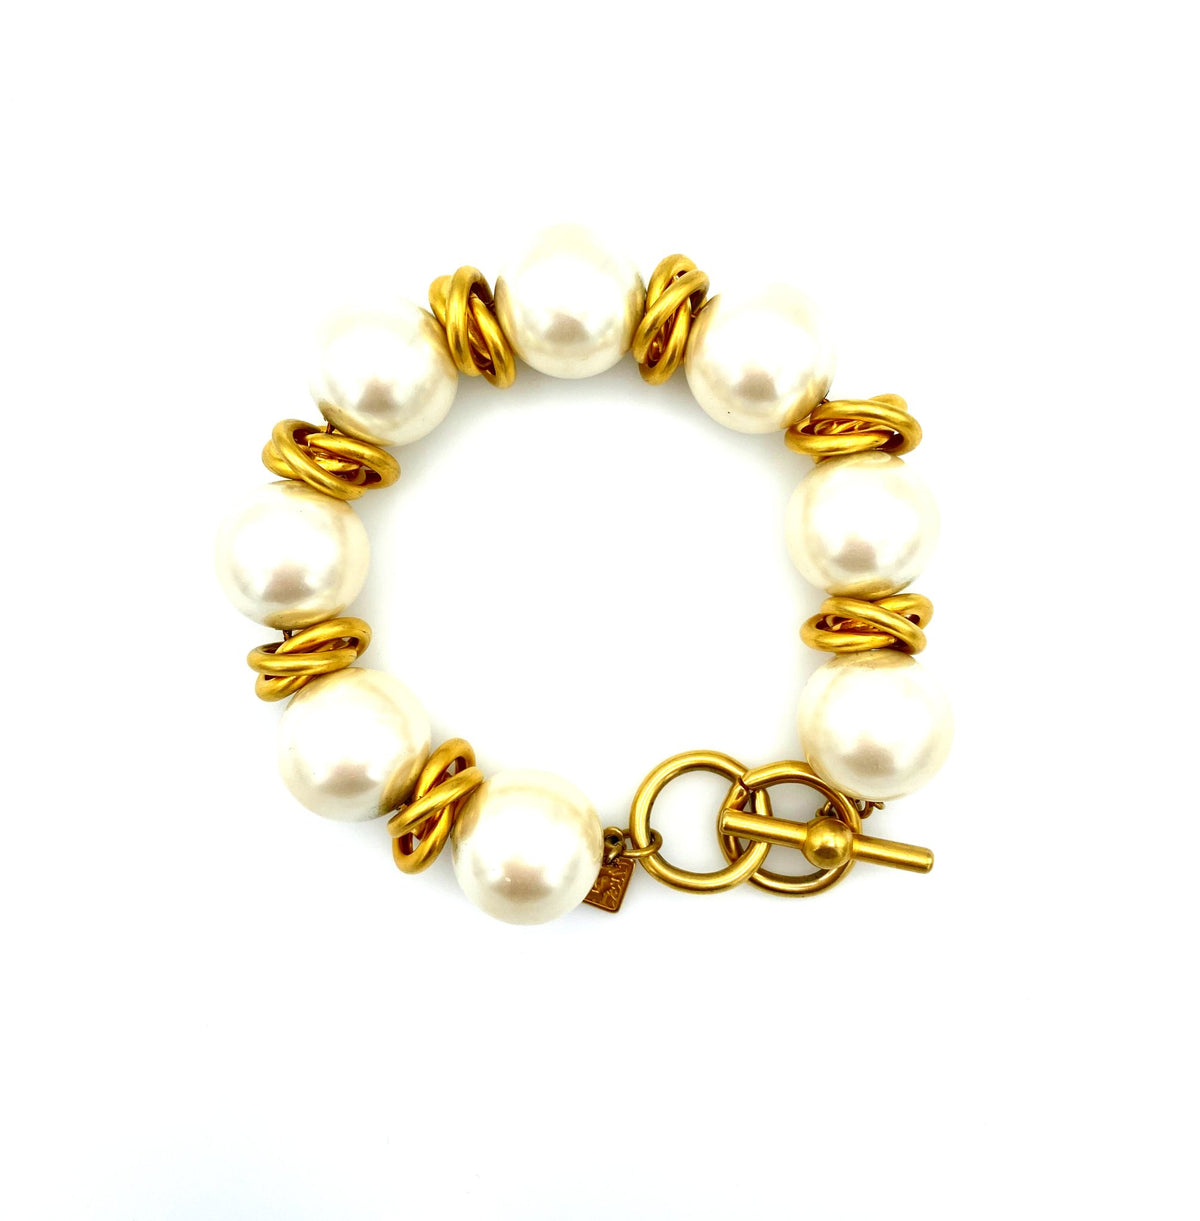 Anne Klein Large Pearl & Gold Knot Vintage Bracelet - 24 Wishes Vintage Jewelry